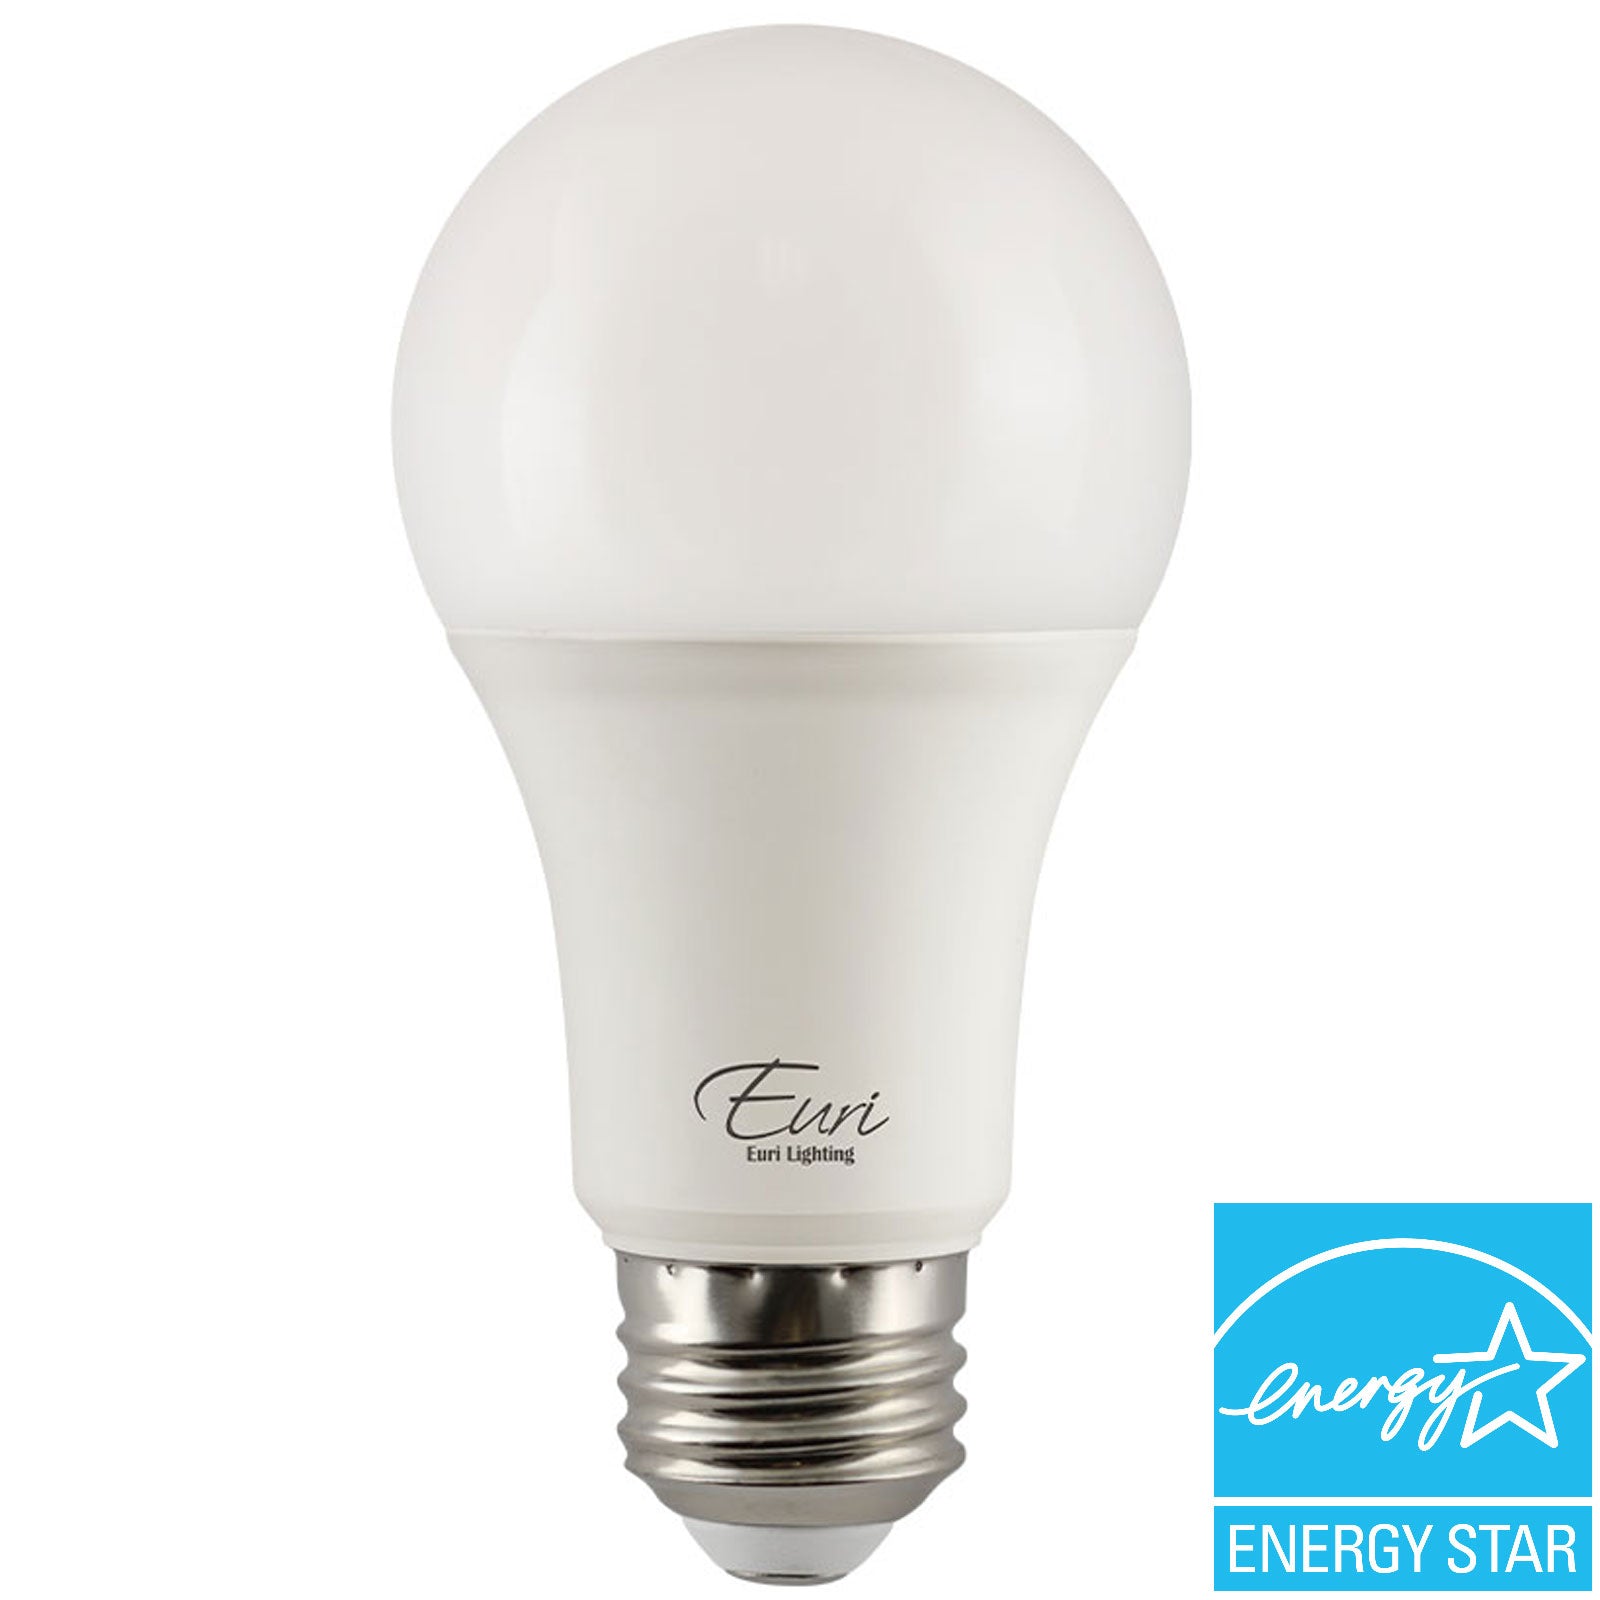 60-Watt Equivalent A19 E26 Dimmable General Purpose LED Light Bulb